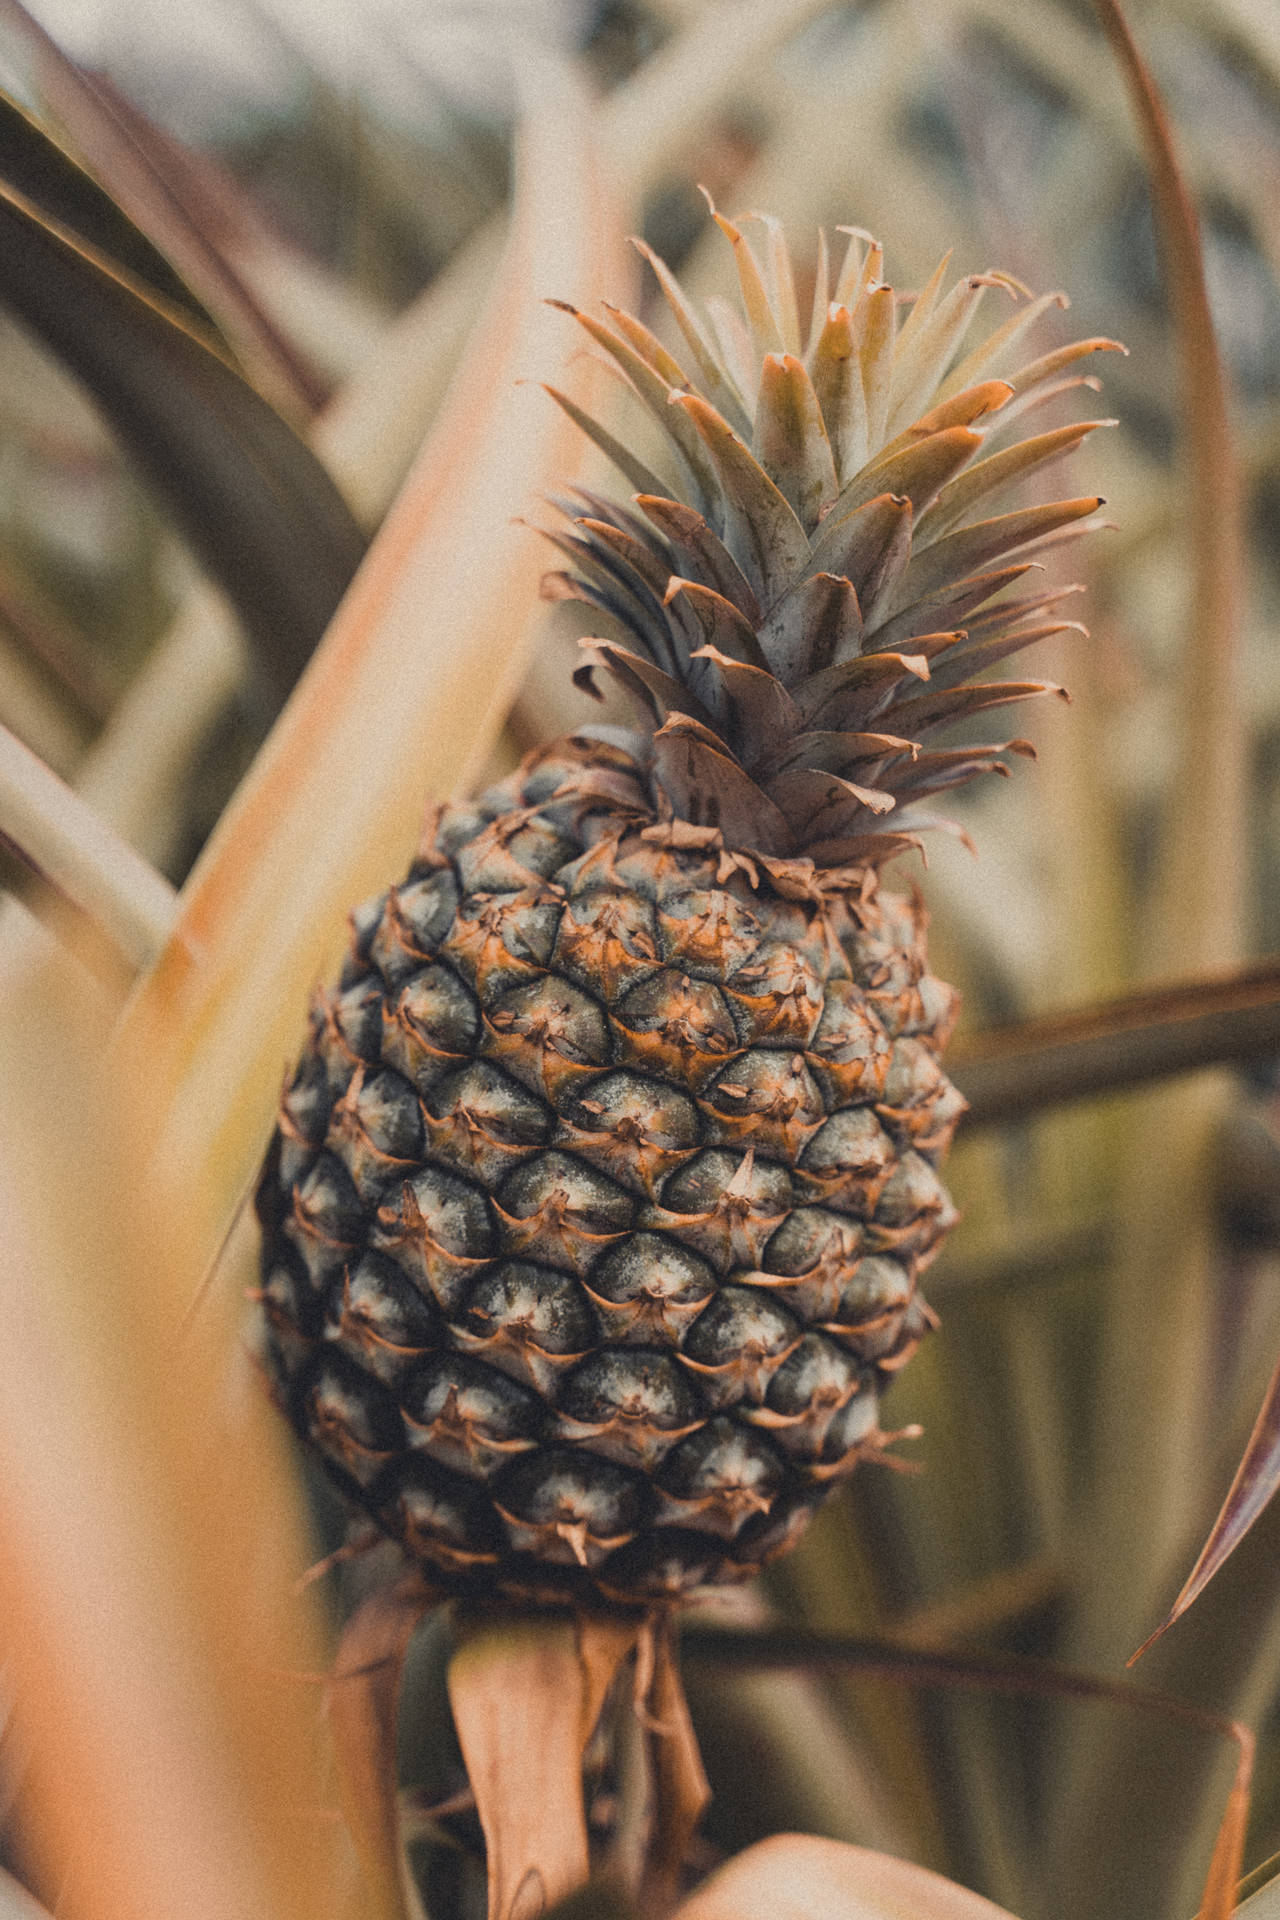 "A ripe pineapple in the tropics" Wallpaper